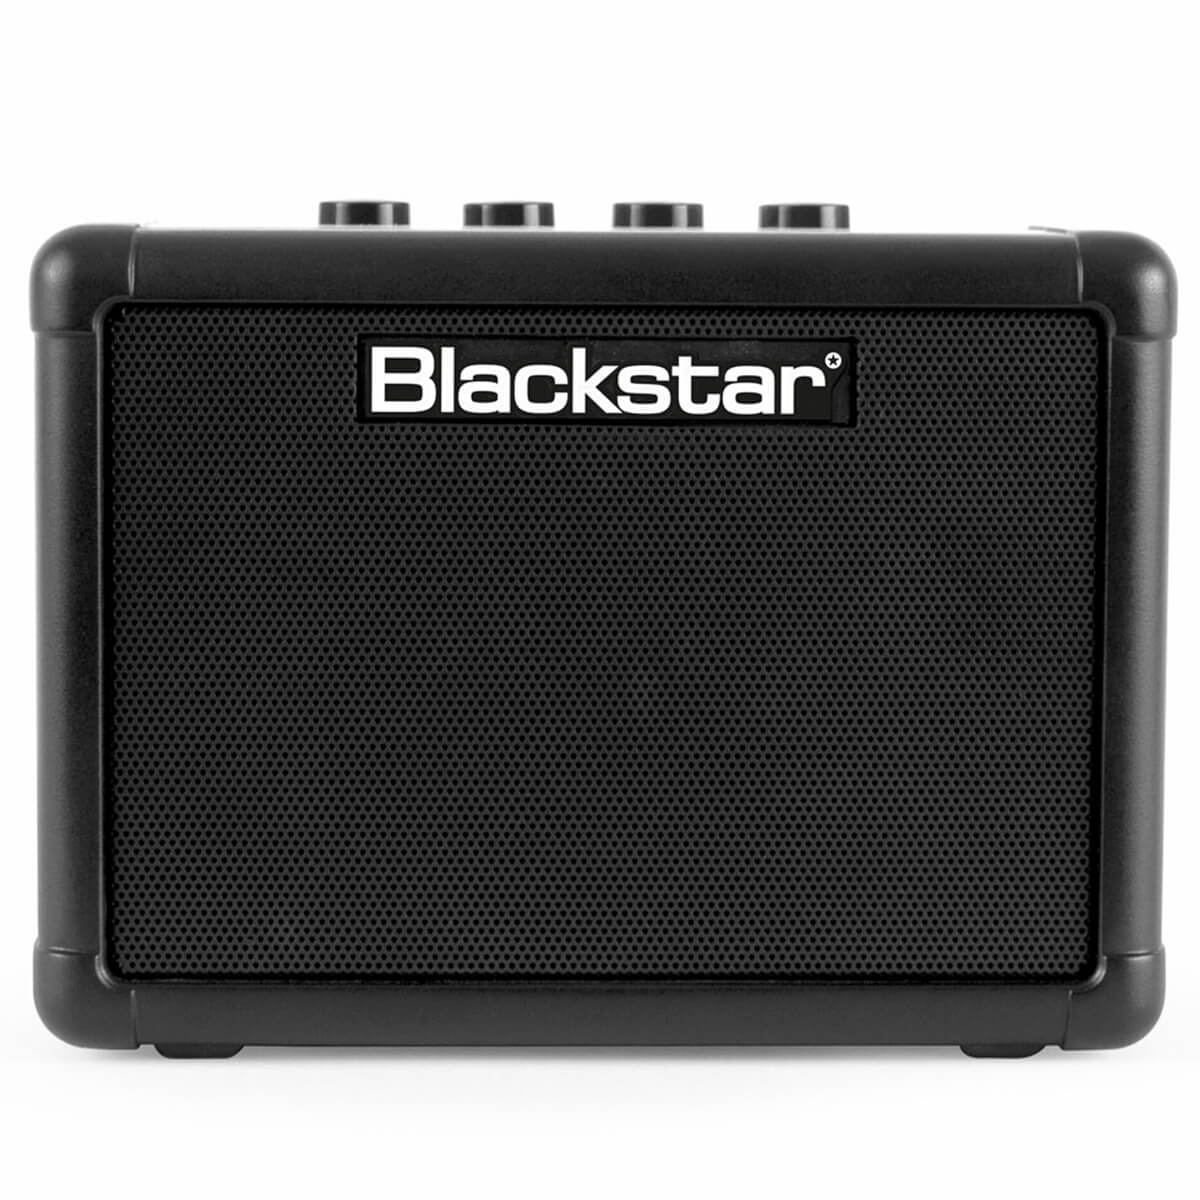 Blackstar Amps FLY 3 mini guitar amplifier front